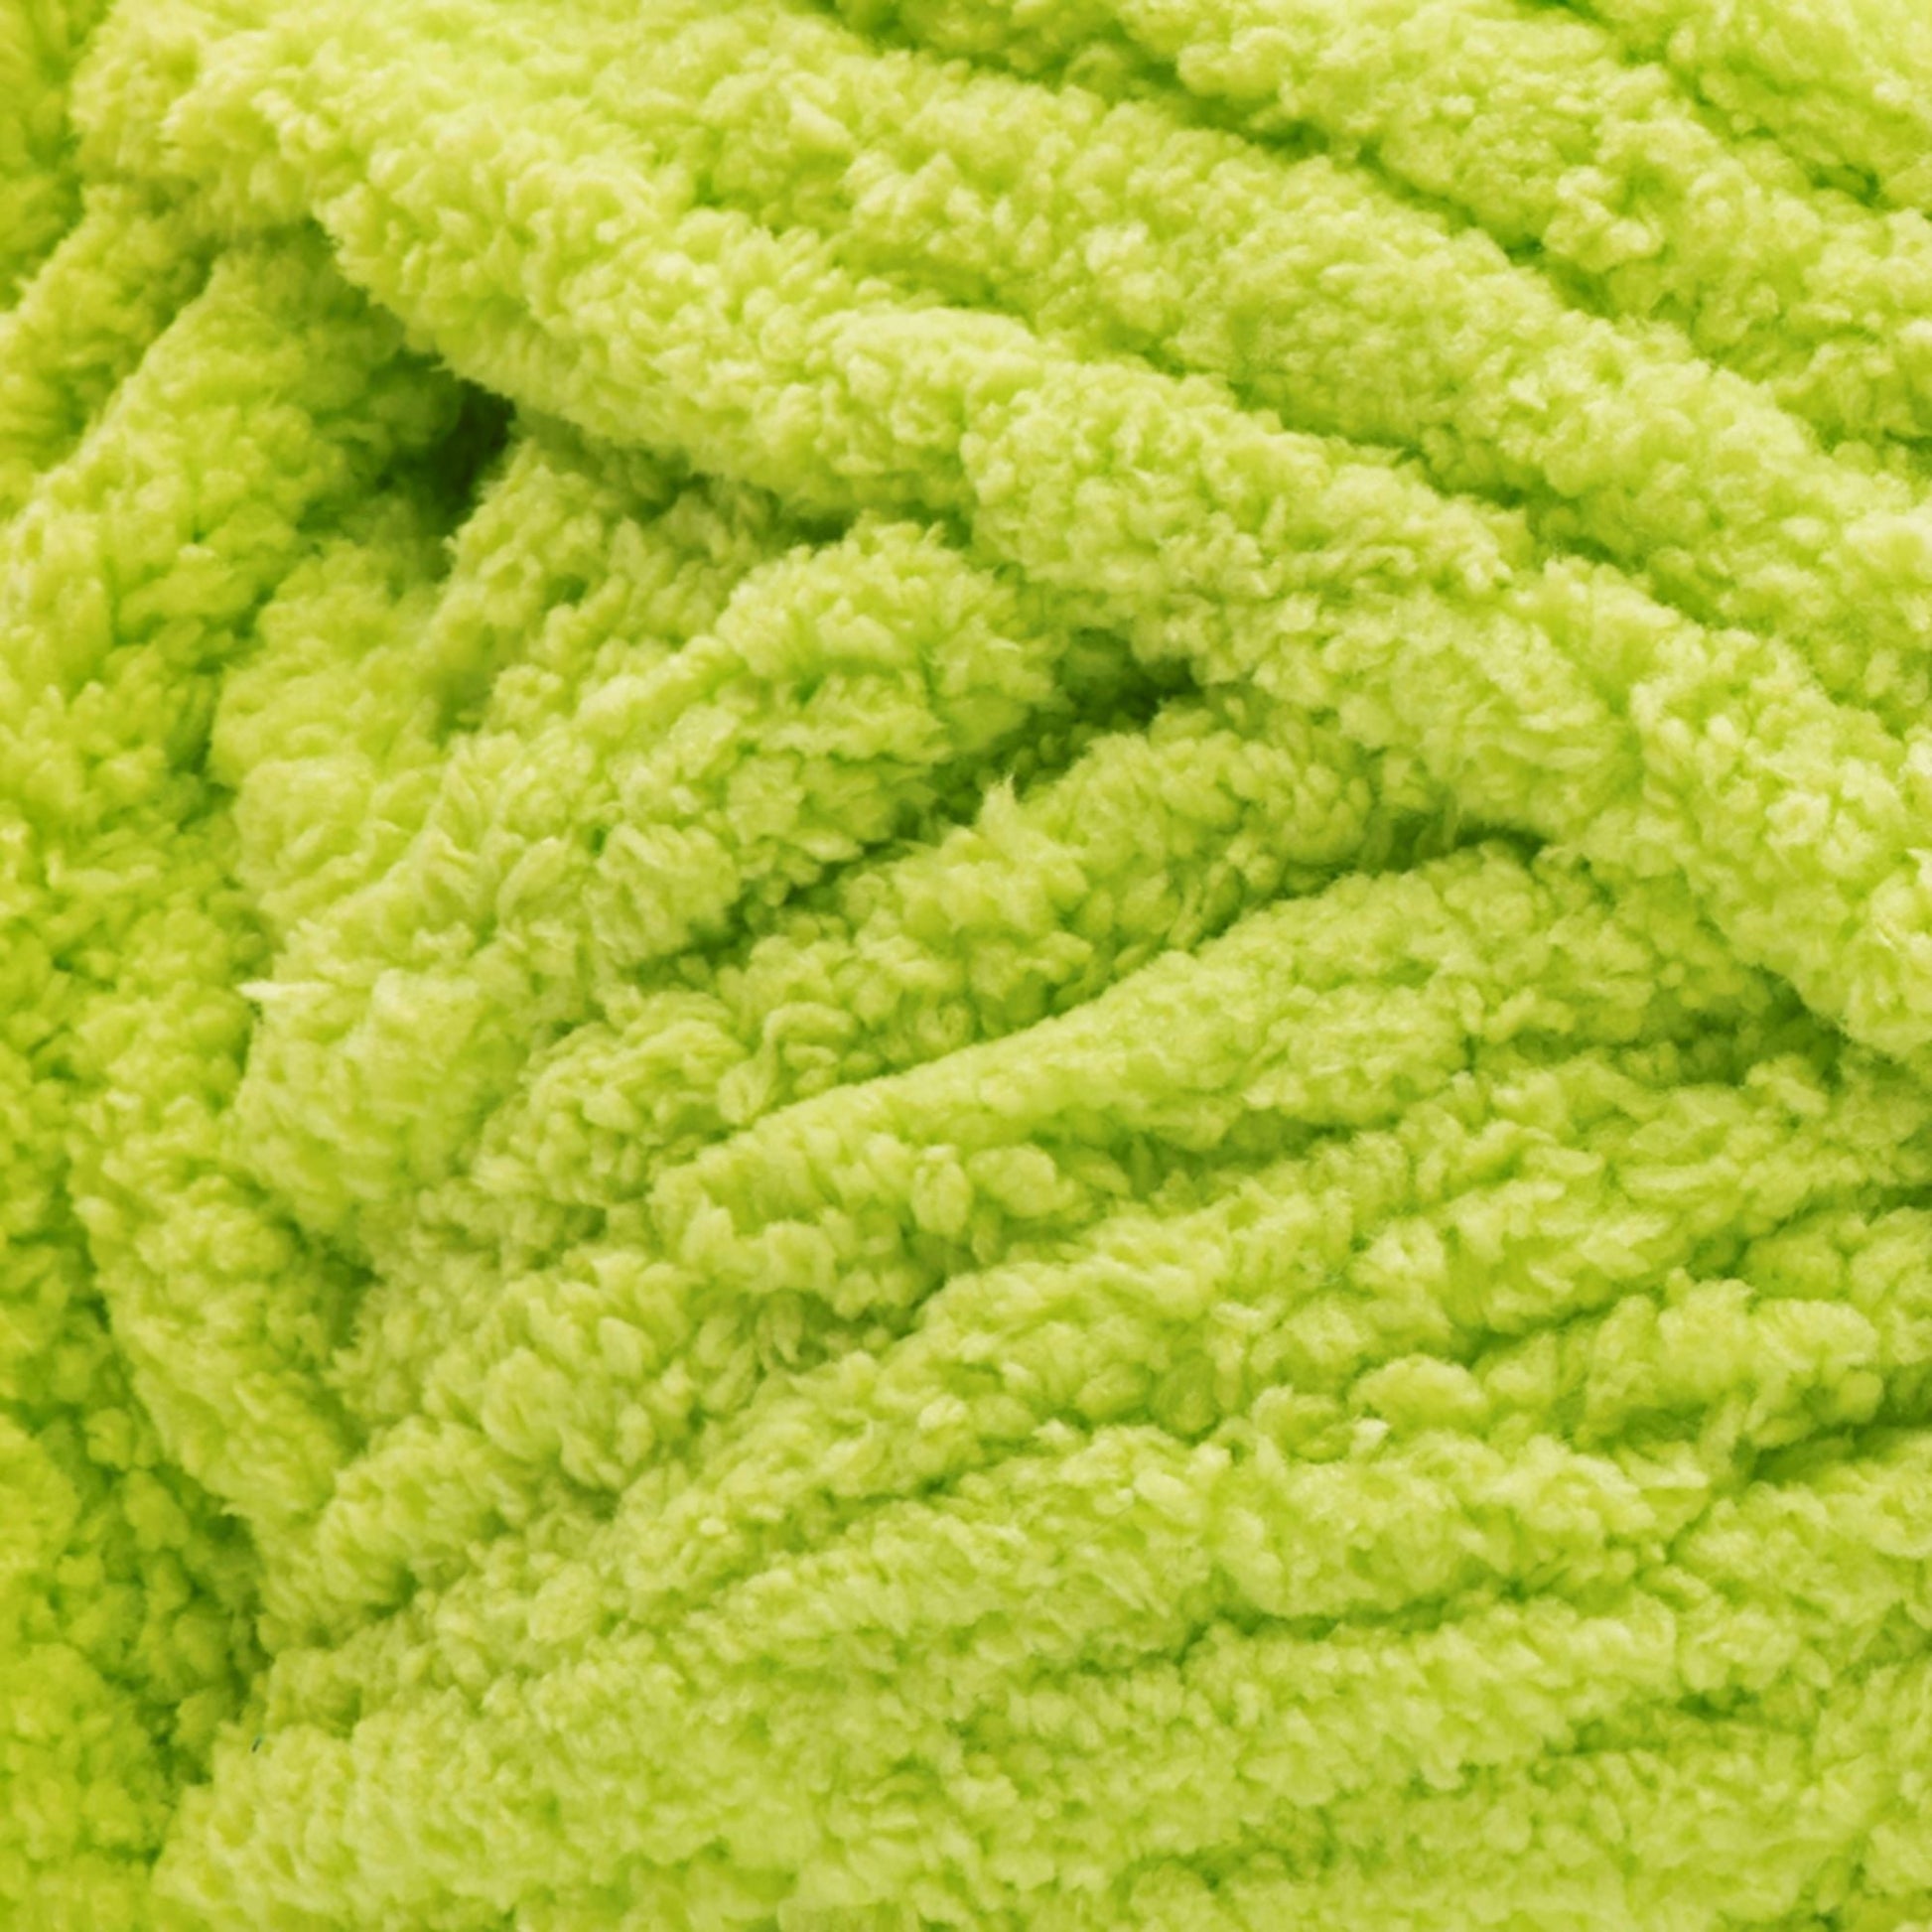 Bernat Blanket Extra Yarn (300g/10.5oz) - Clearance Shades*